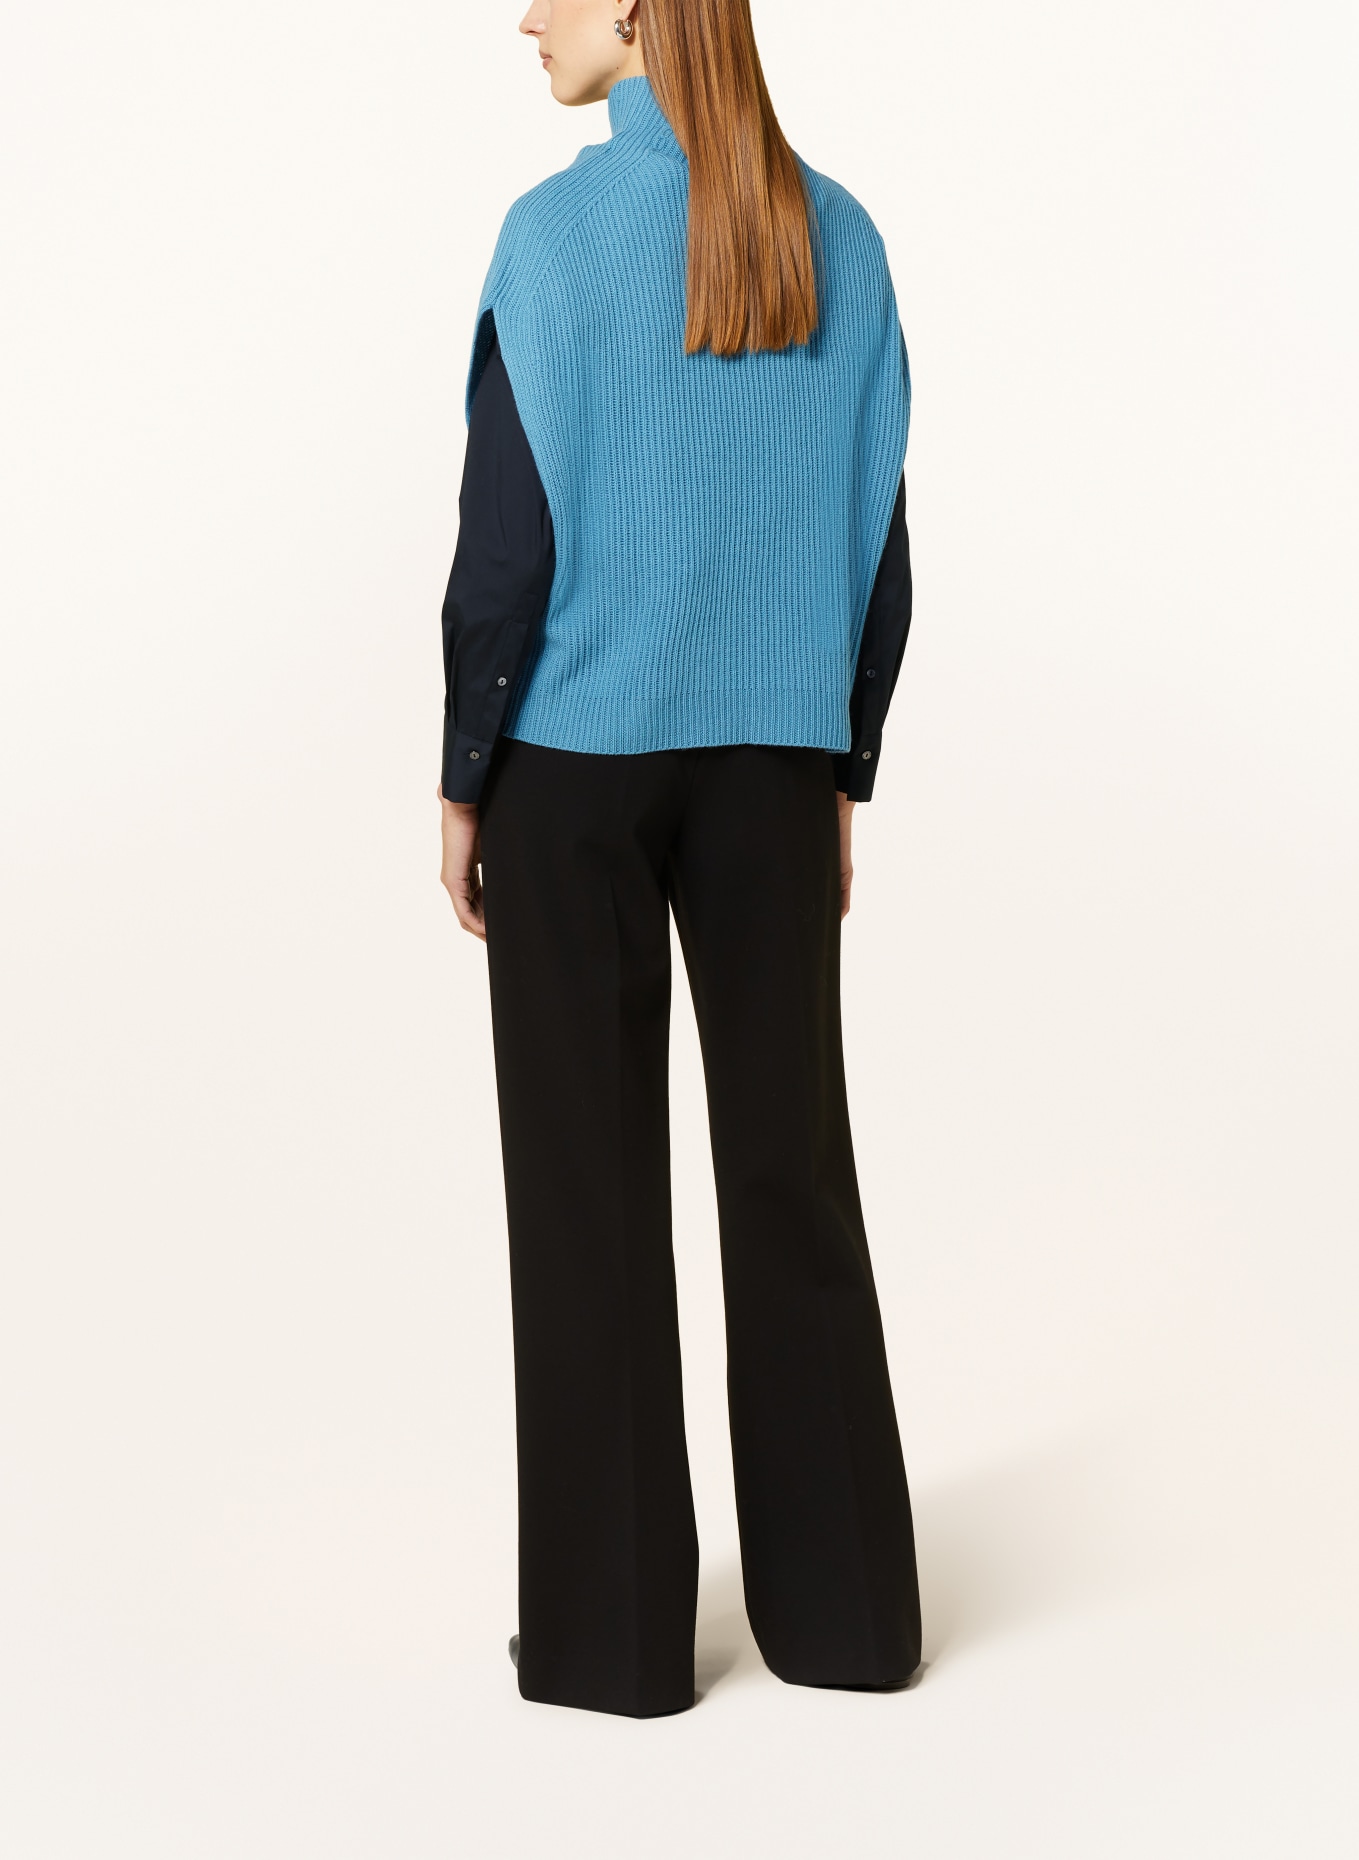 HERZEN'S ANGELEGENHEIT Sweater vest with cashmere, Color: LIGHT BLUE (Image 3)